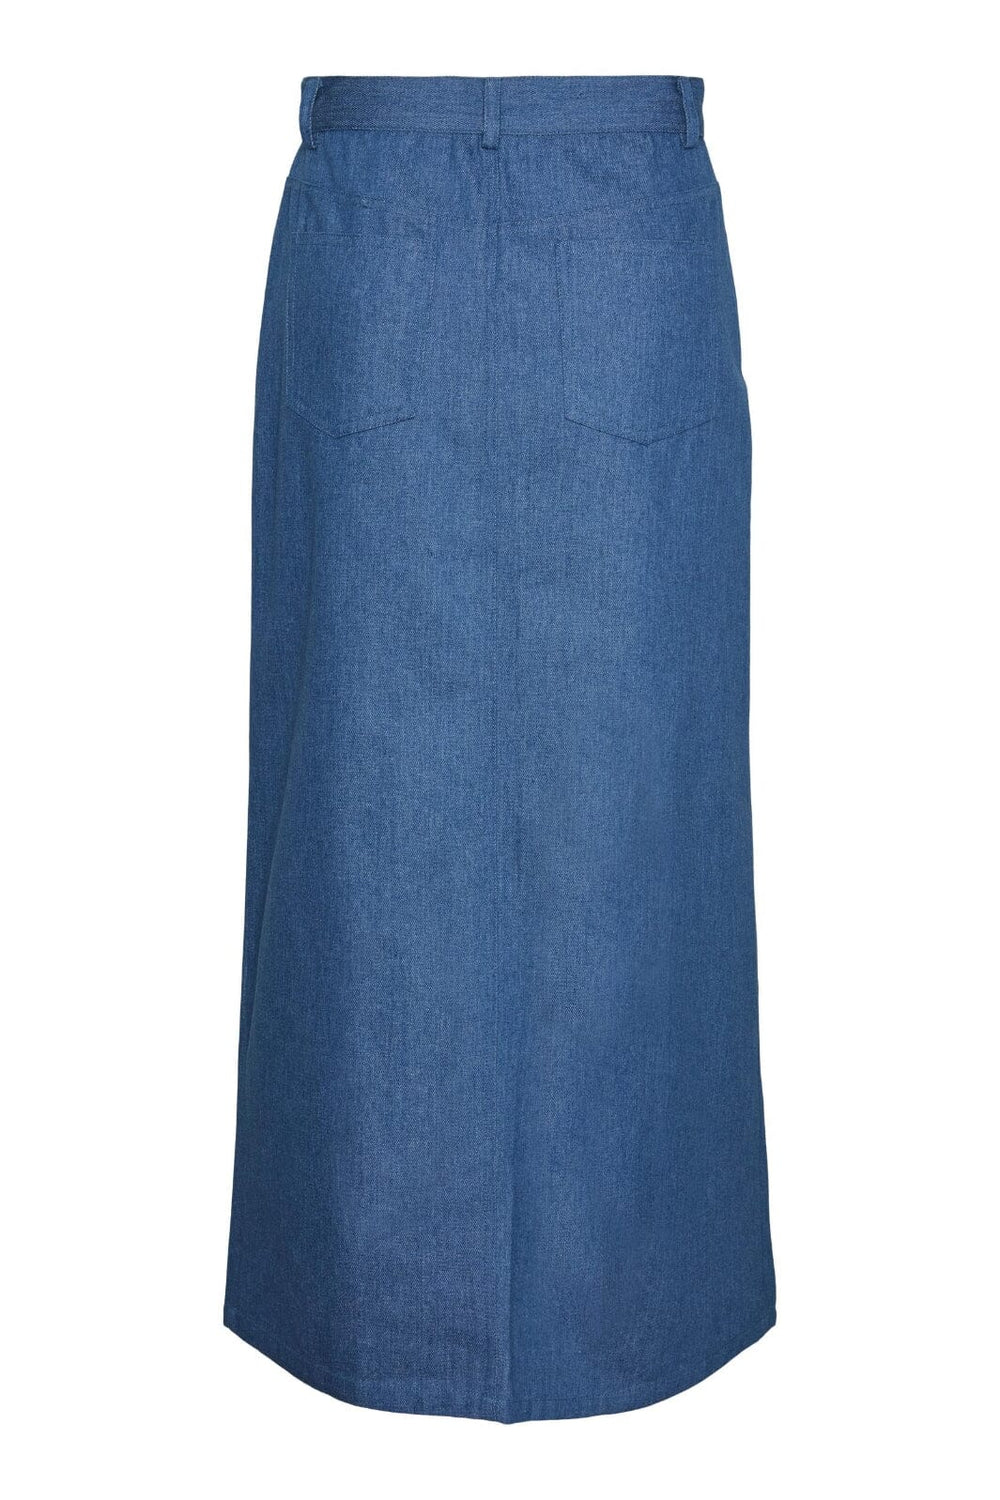 Pieces - Pcasta Long Skirt - 4503122 Medium Blue Denim Nederdele 